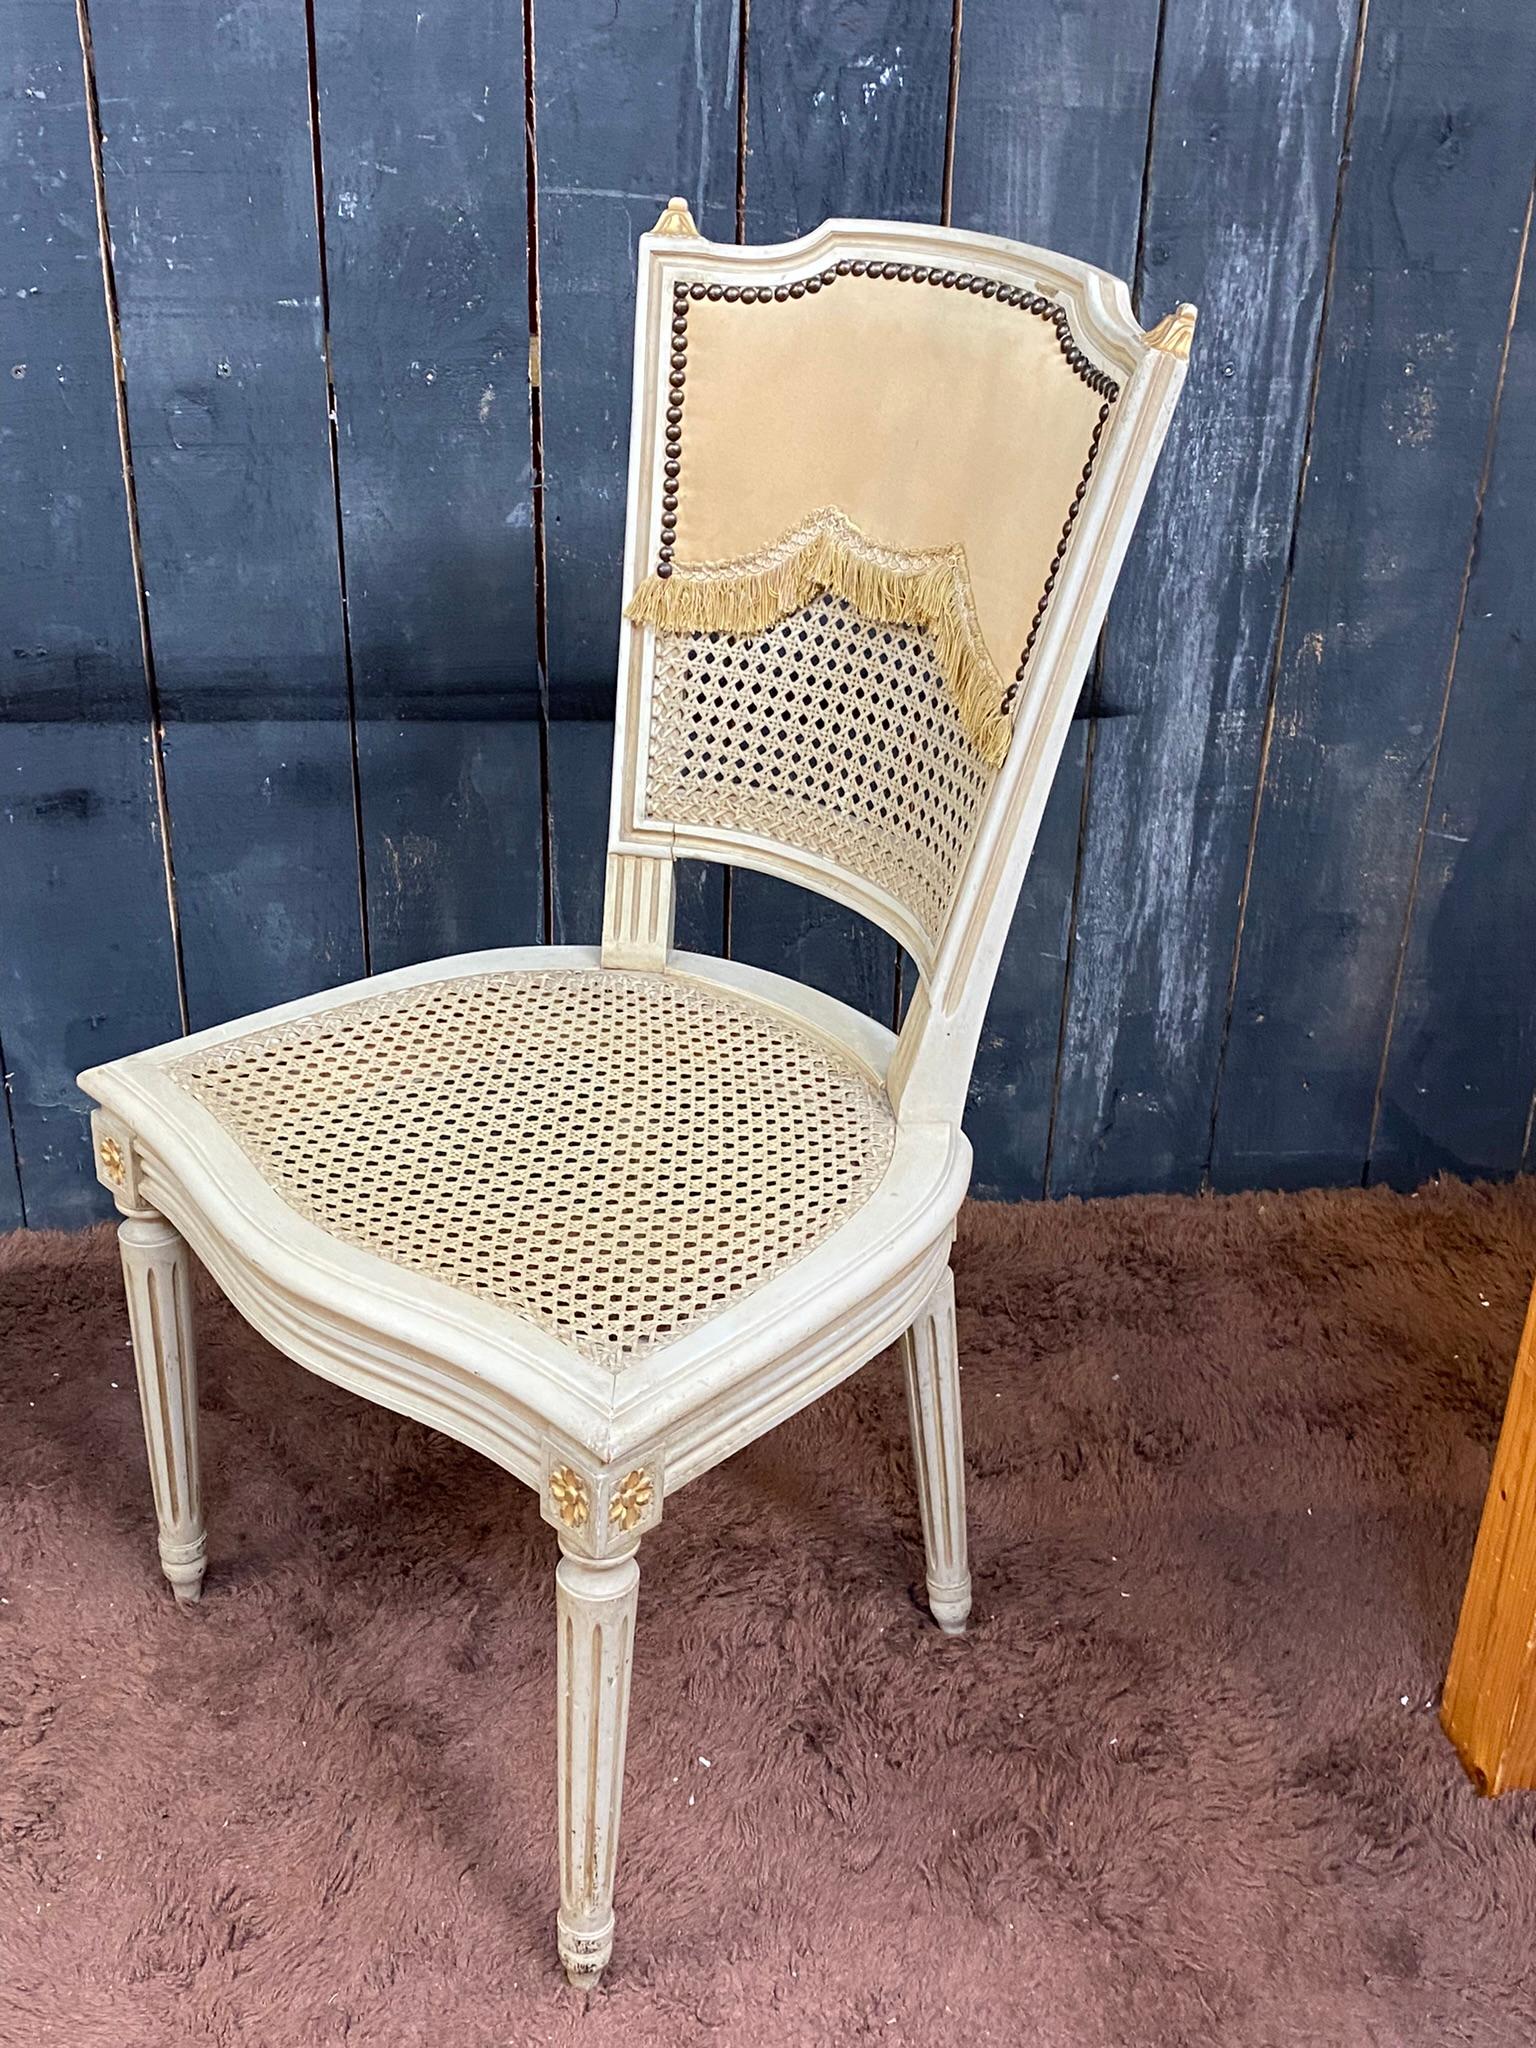 Set of four Louis XVI chairs
hs: 19